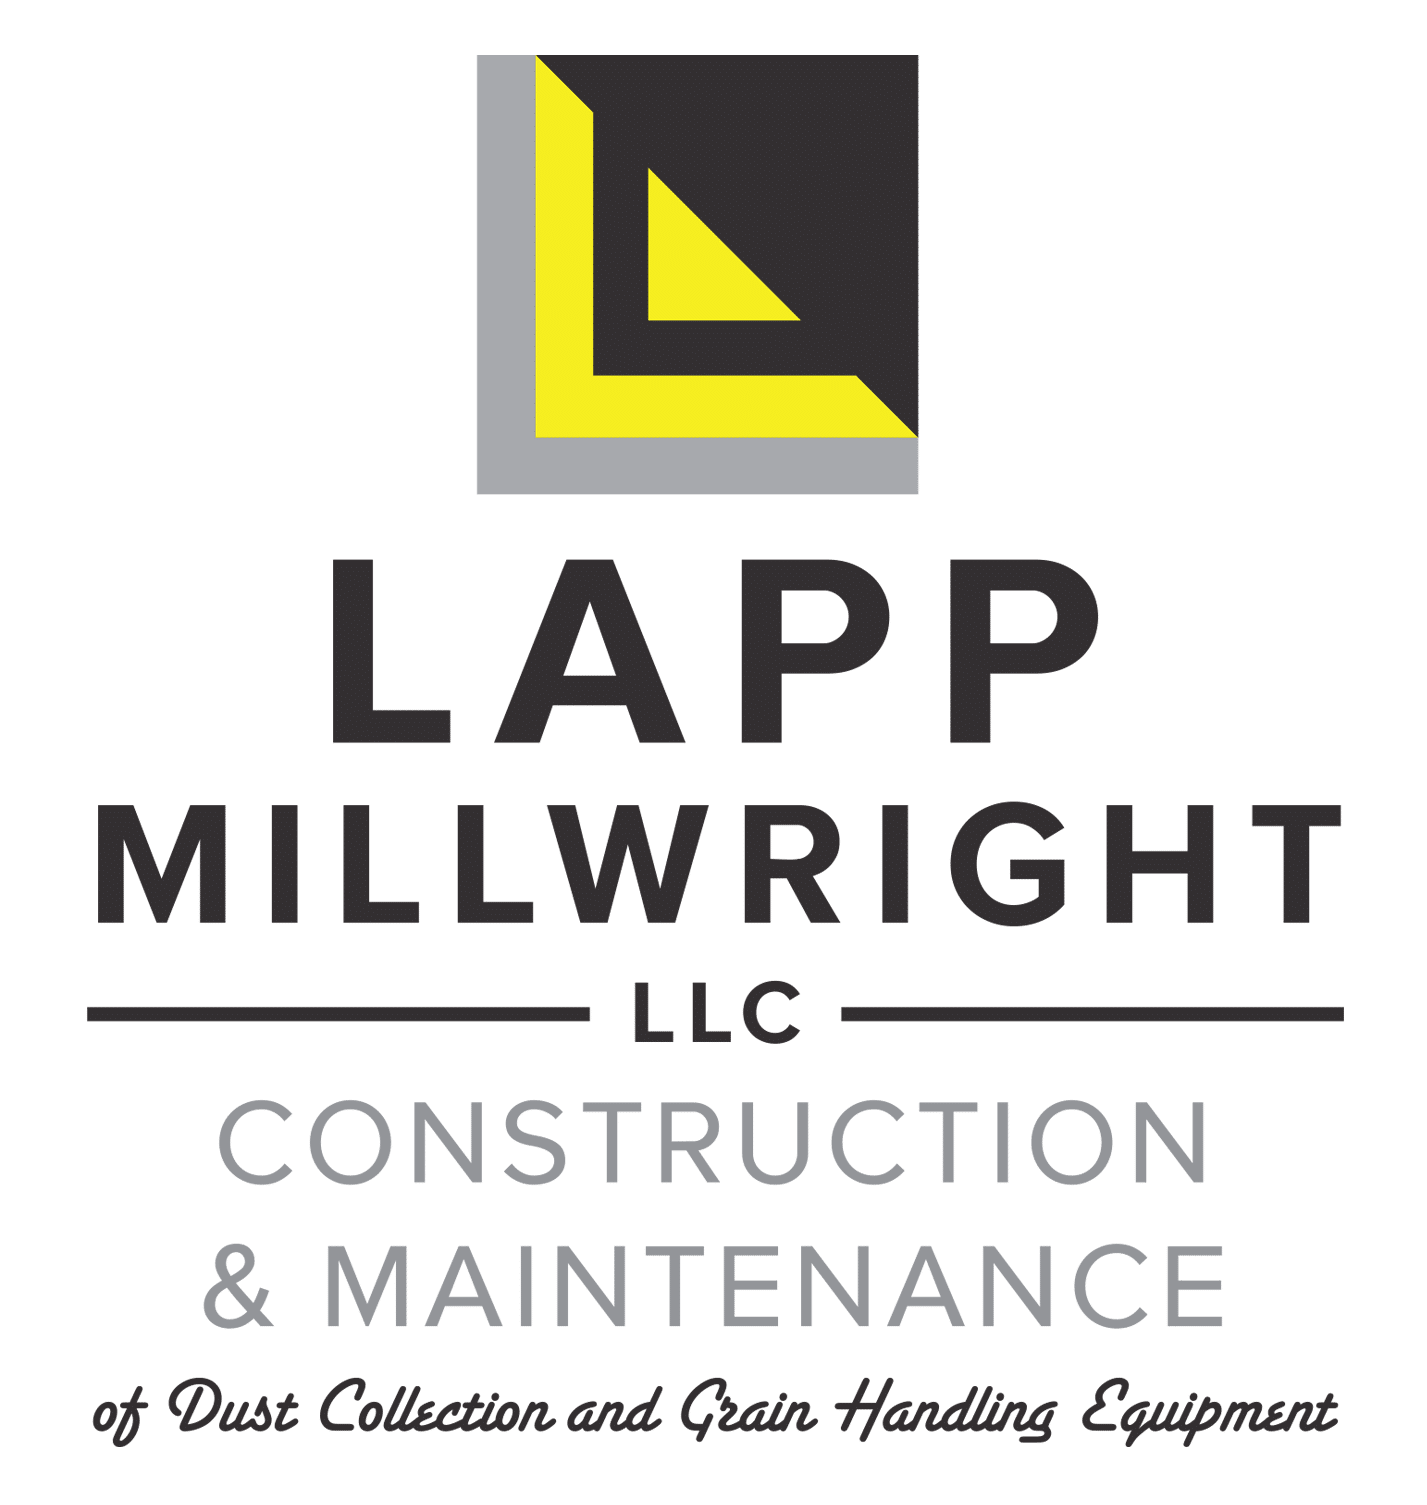 Logo_LappMillwright